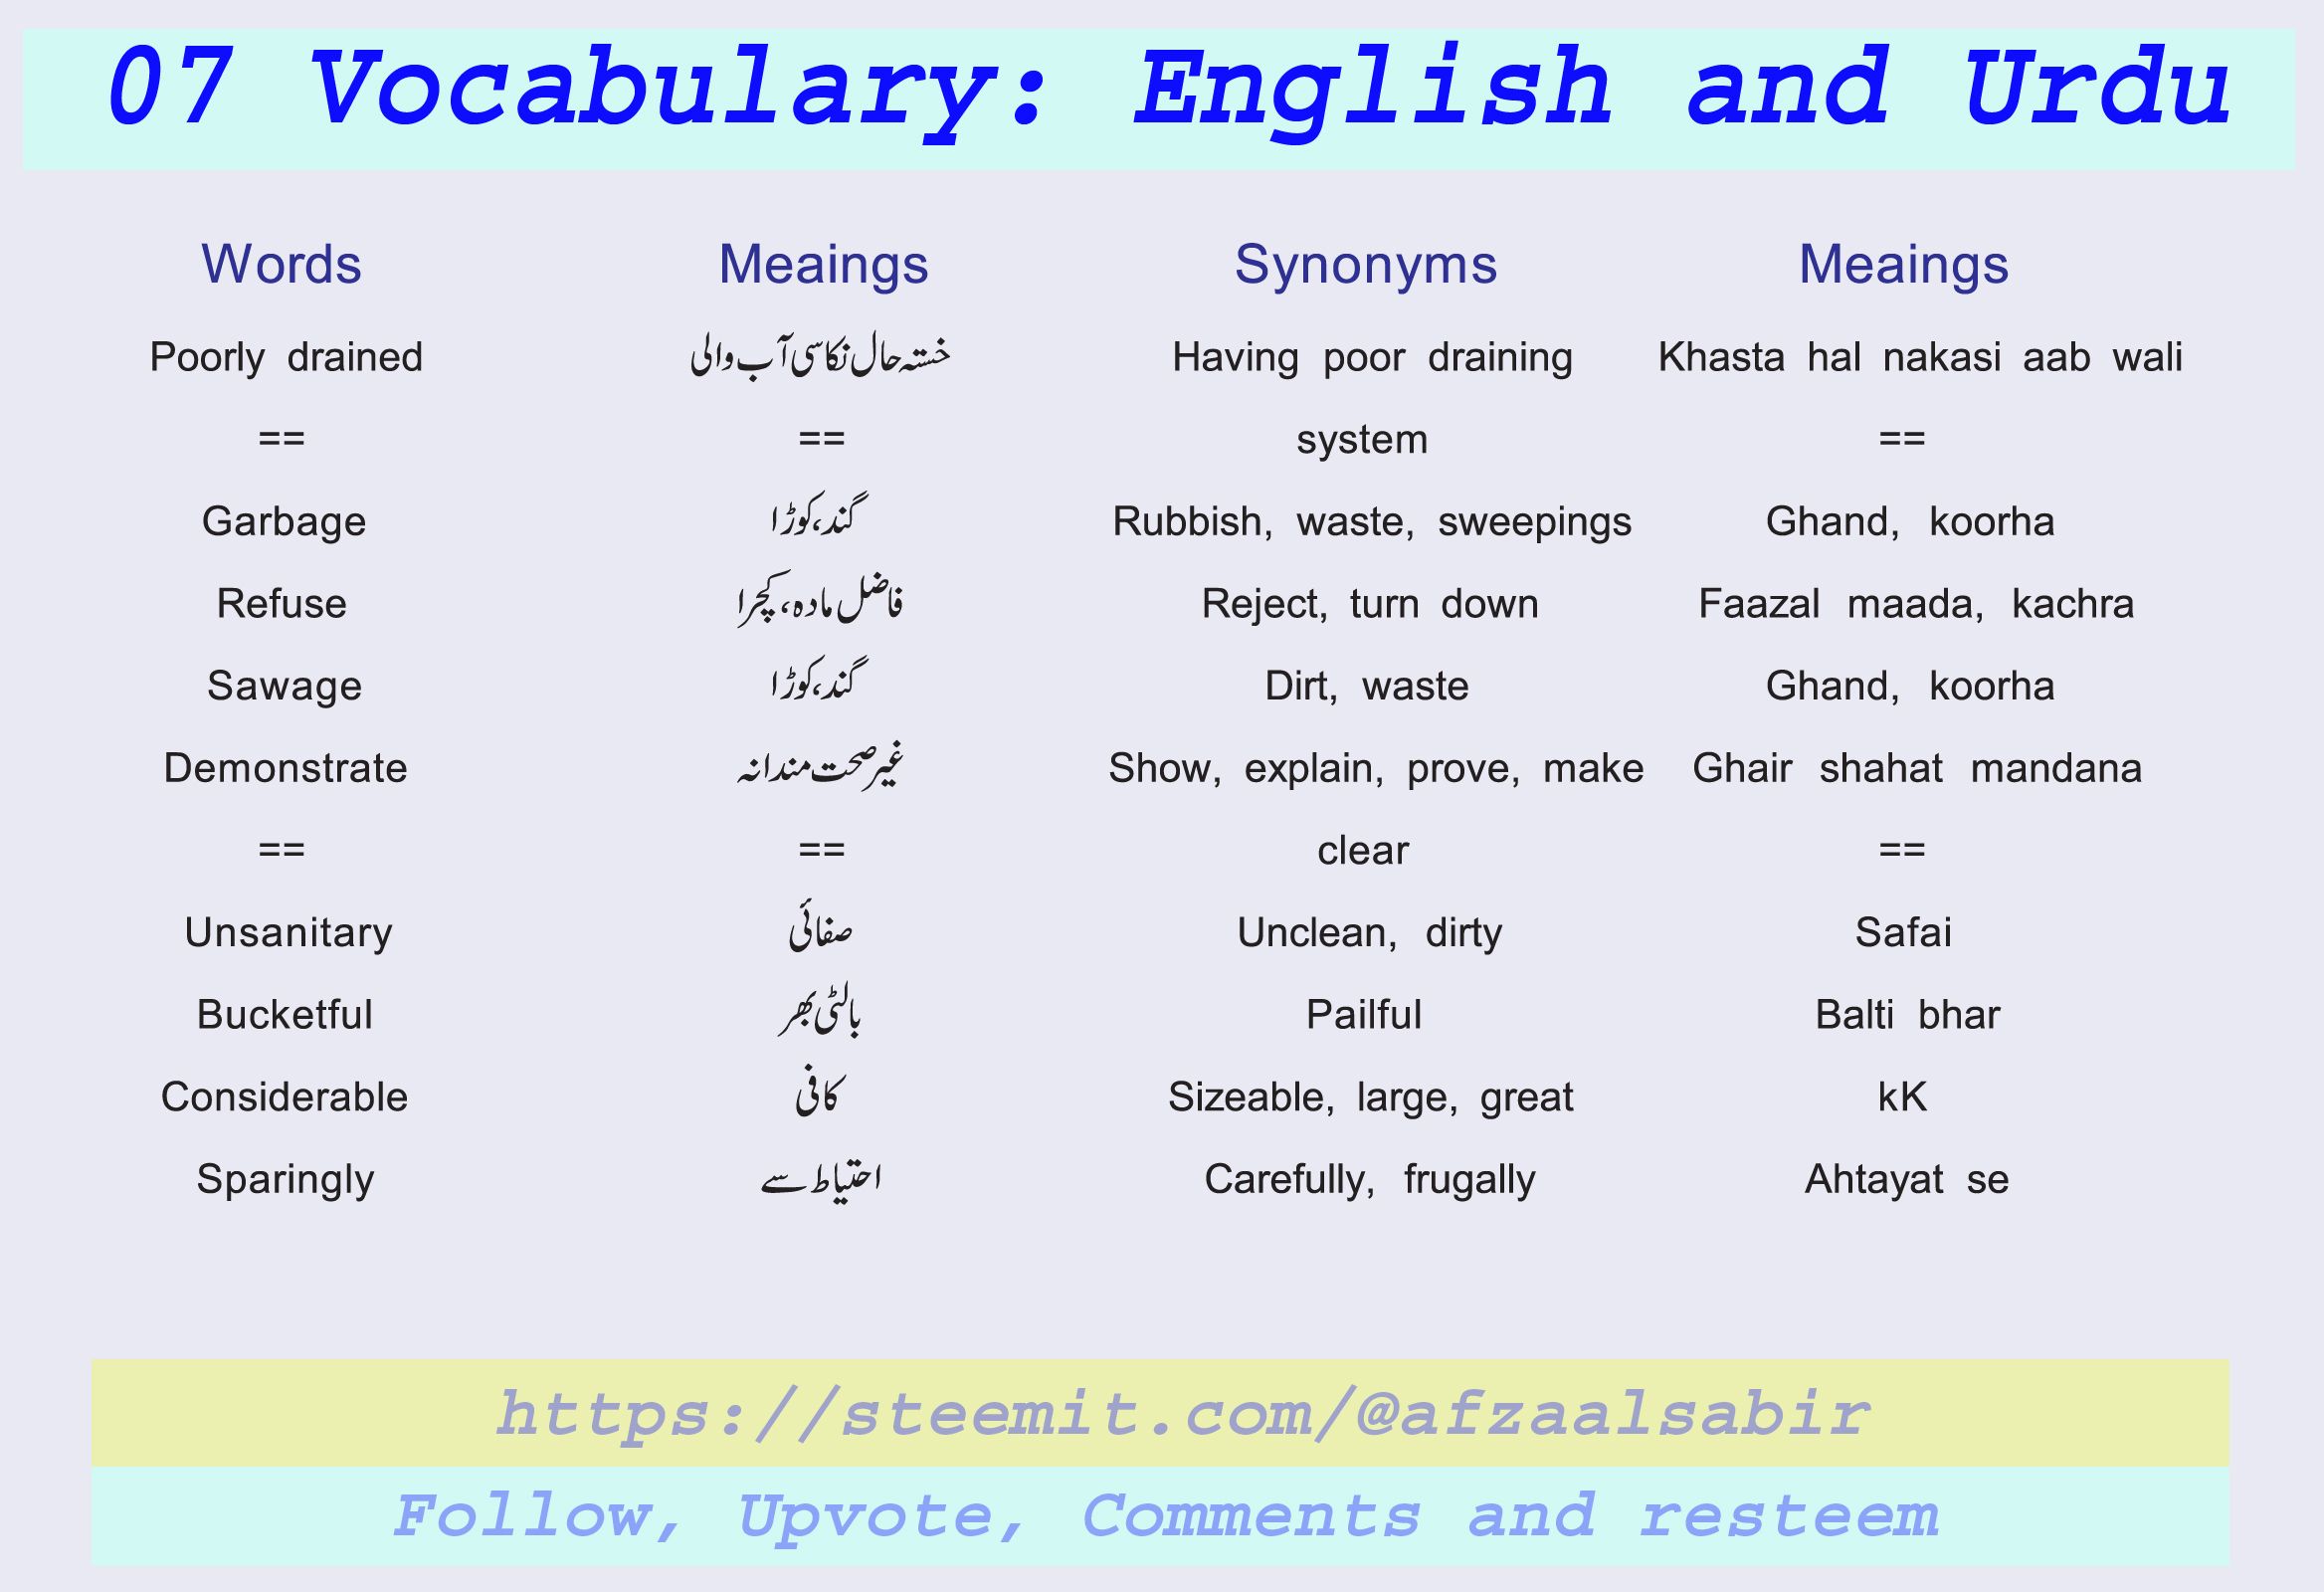 7. Vocabulary.jpg